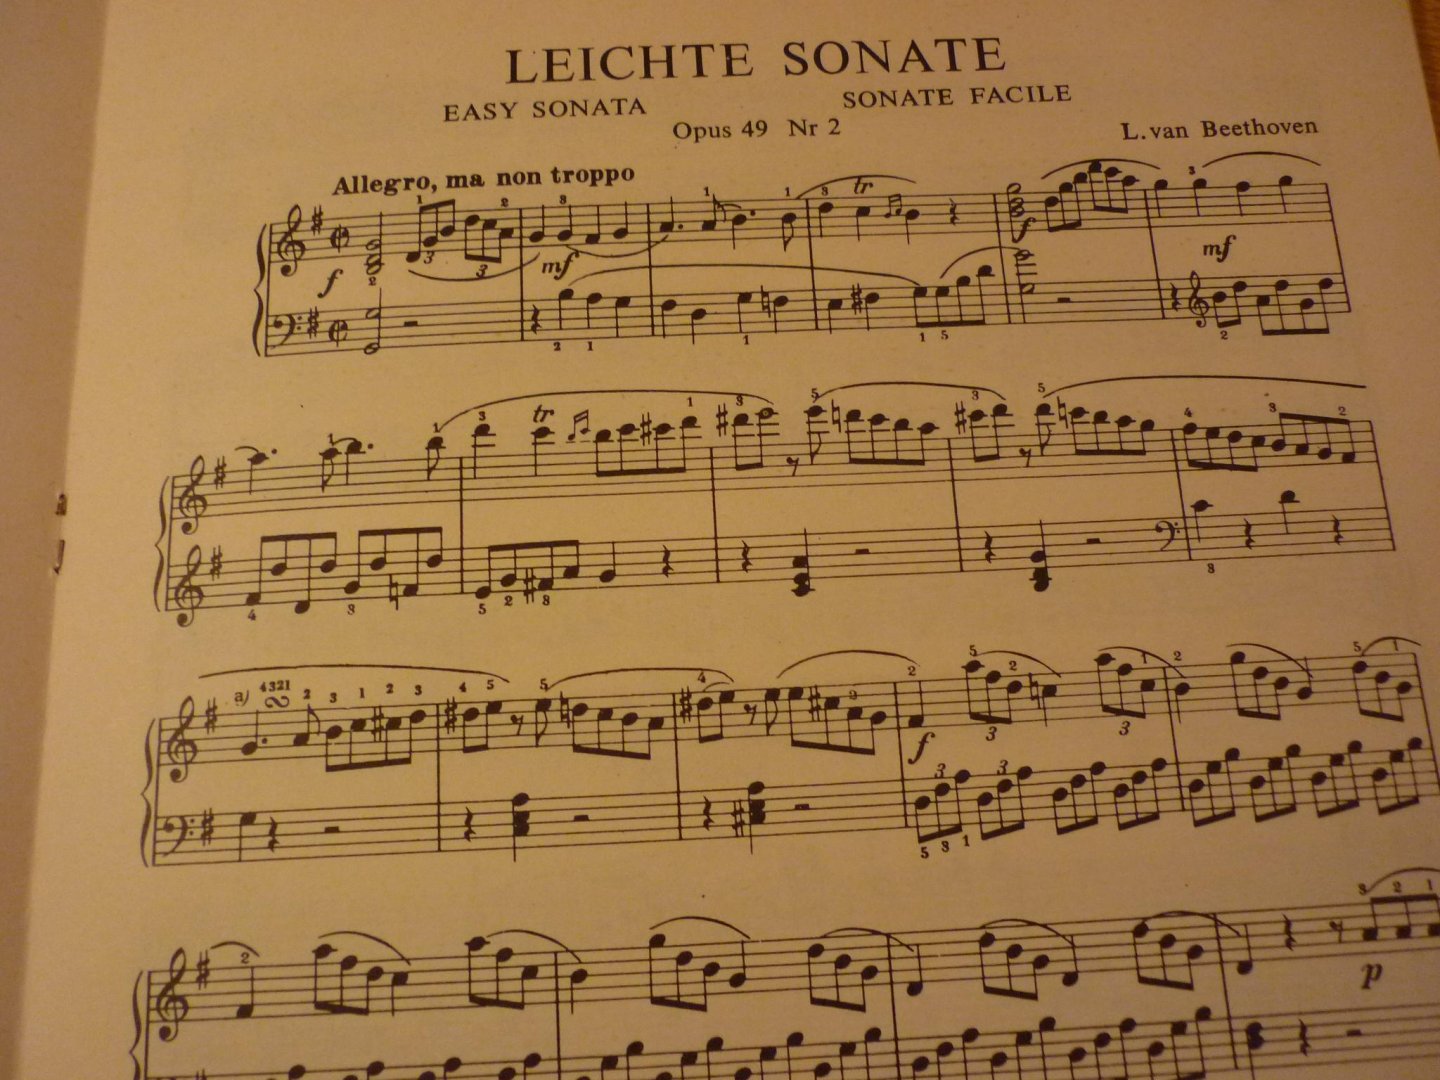 Beethoven; Ludwig von - Zwei leichte Klaviersonaten Opus 49; (Nr 1: g-moll - G minor - sol mineur; Nr 2: G-dur - G Major - Sol majeur) (Herman Nieland)